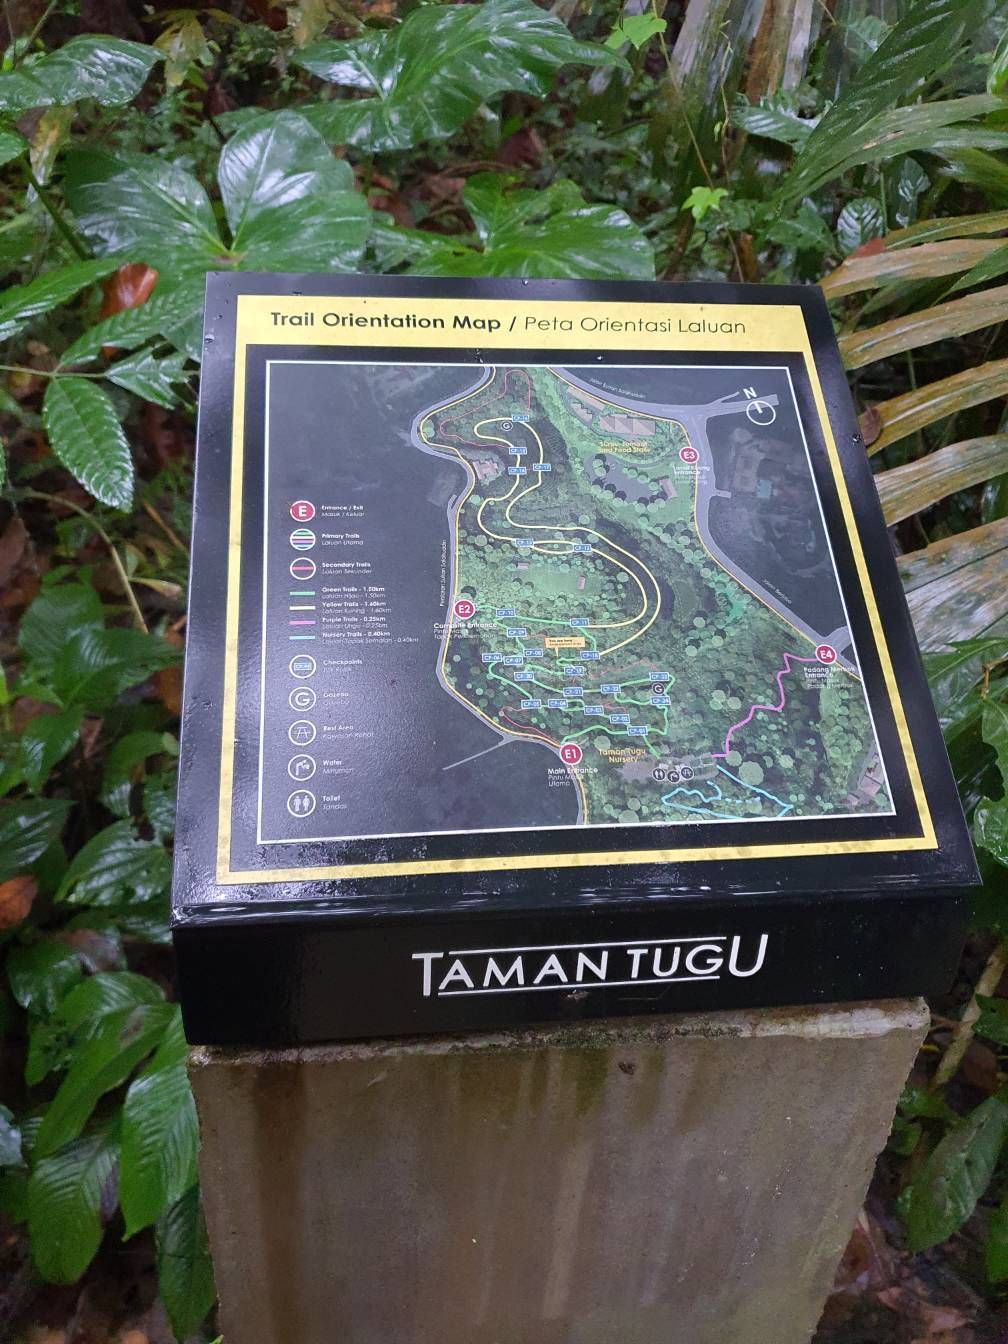 Taman tugu trail map